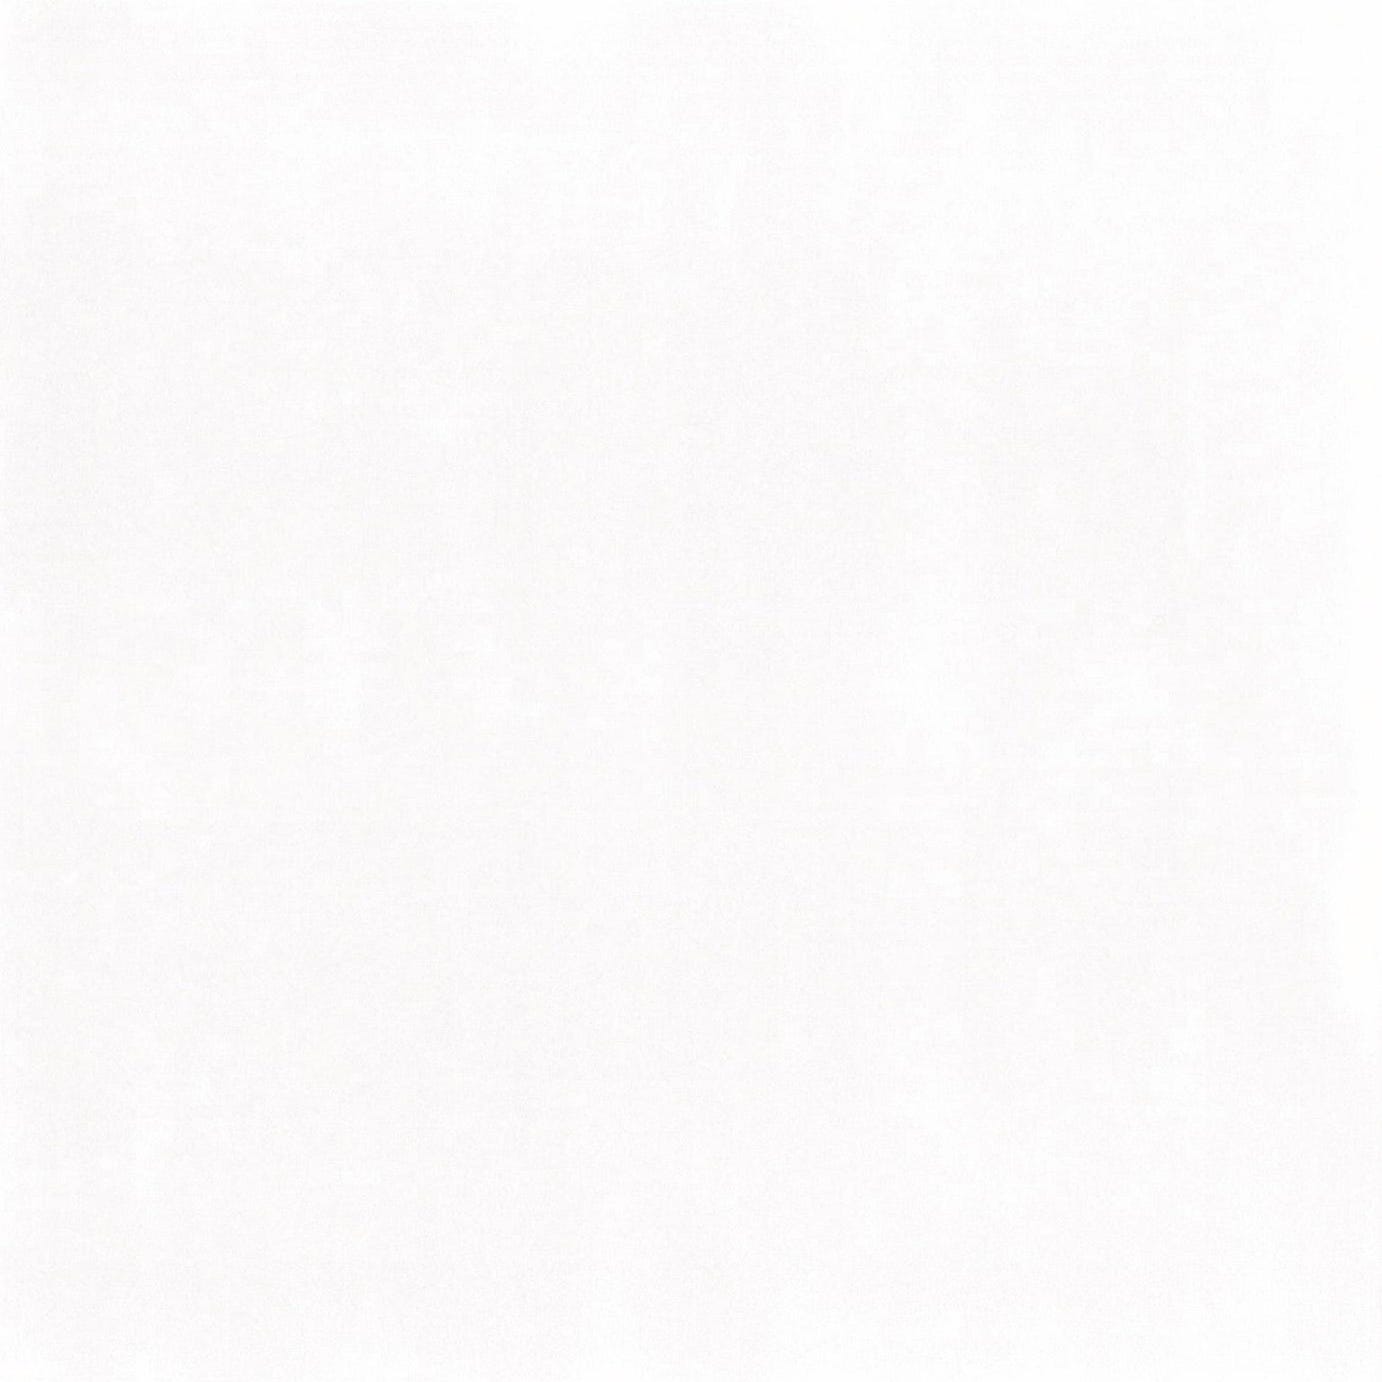 HEELPPO Whiteboard Tableau Blanc Tableau Blanc Effacable Tableau Blanc  Adhesif Tableau Blanc Mural Cuisine Tableau D'affichage Tableau Blanc  Papier Bâton sur Tableau Blanc : : Fournitures de bureau